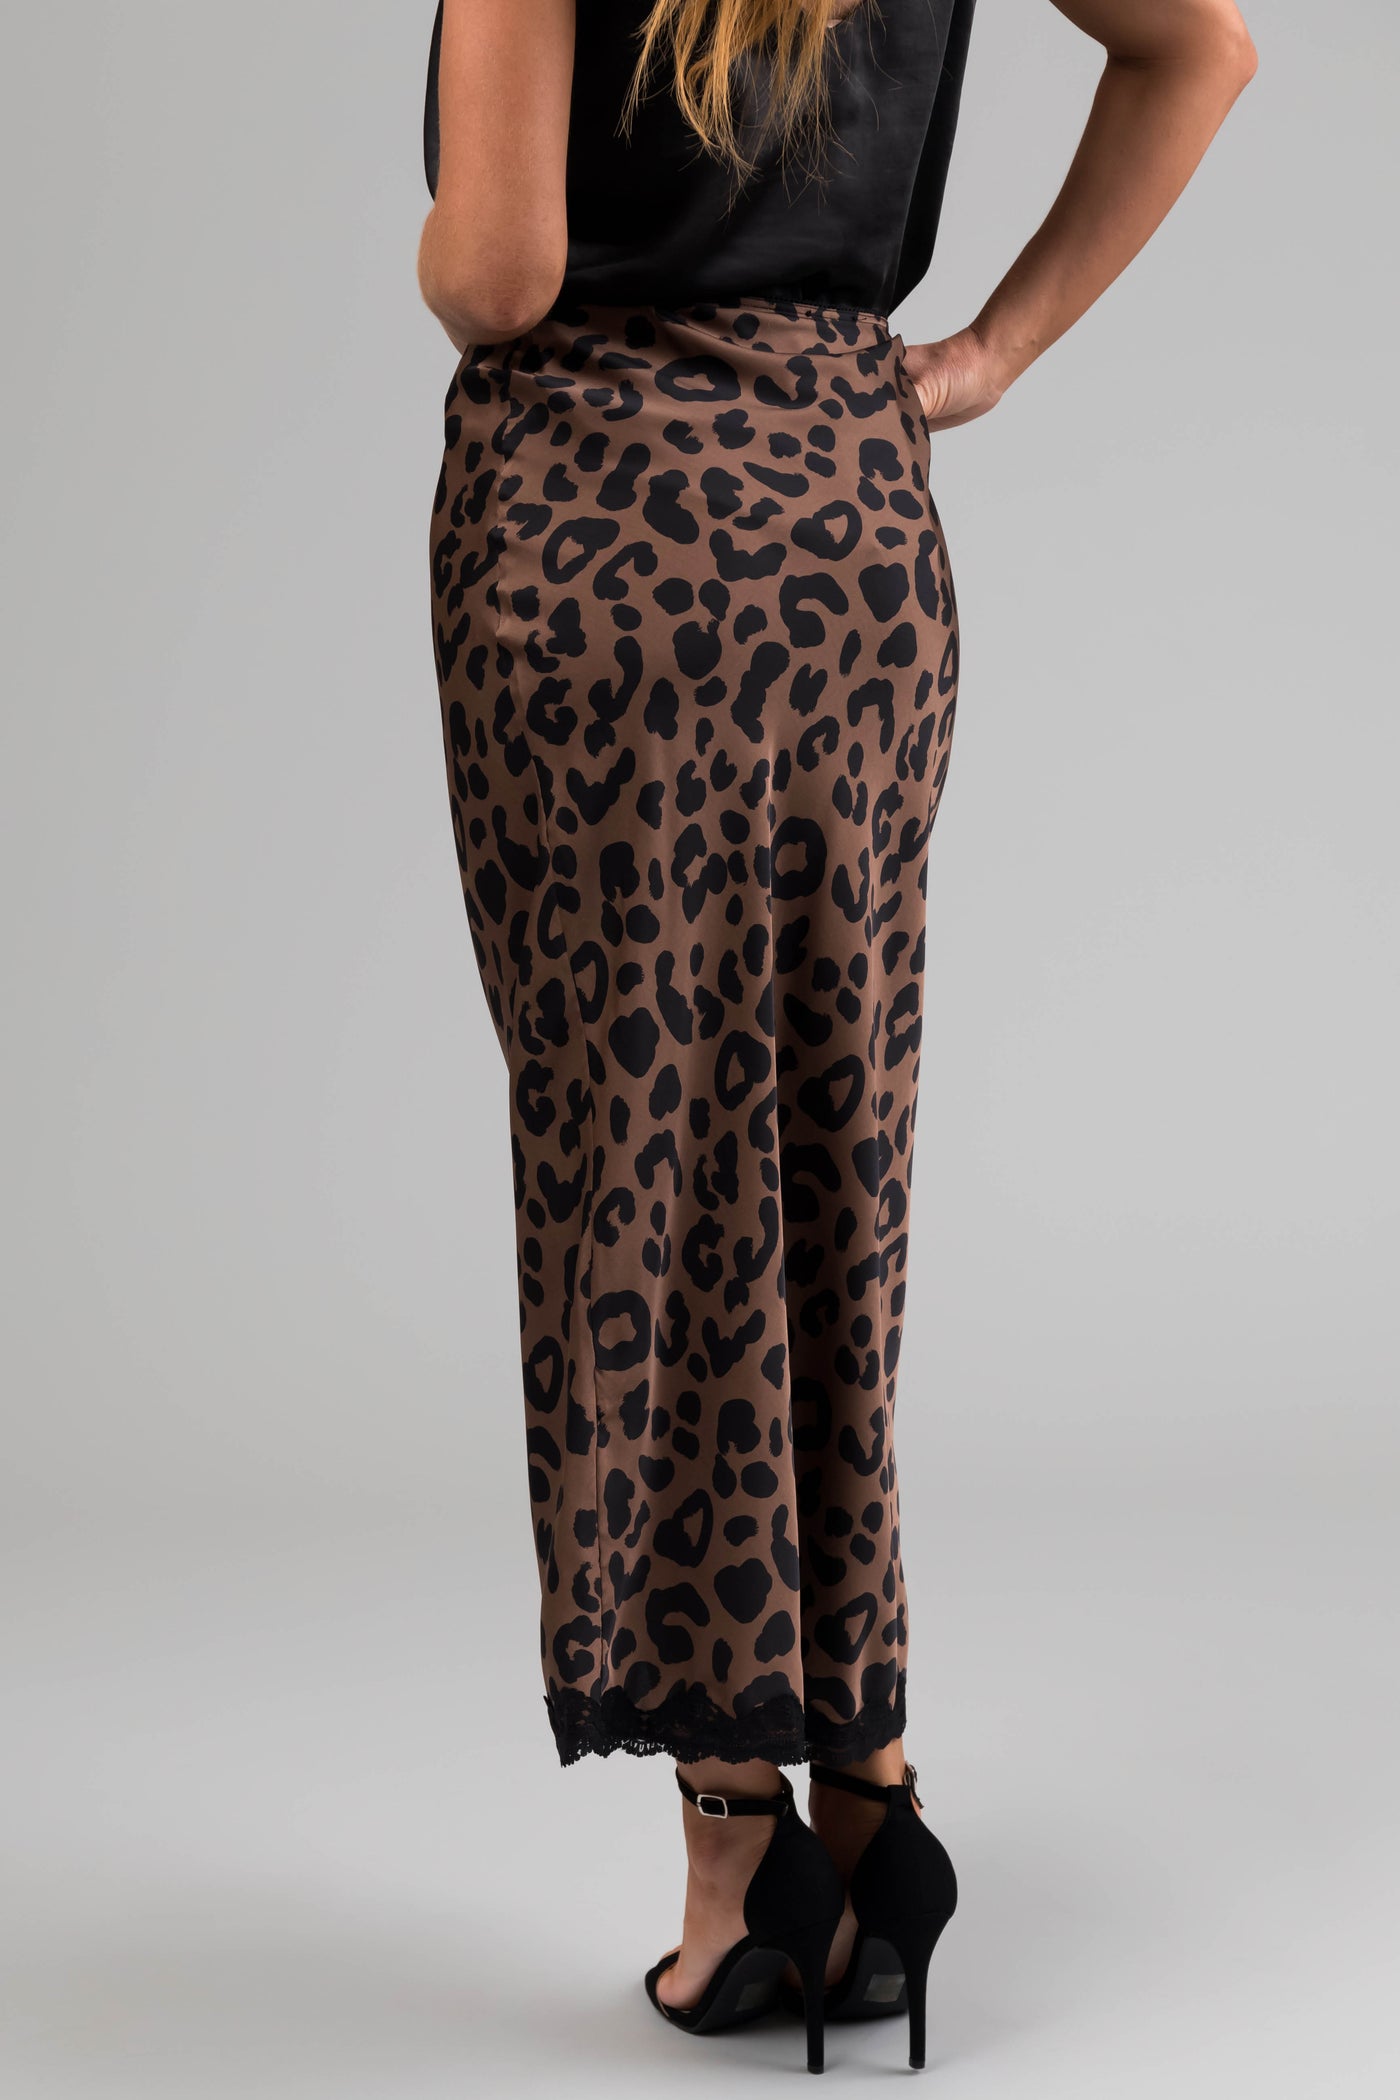 Cocoa Leopard Print Lace Trim Satin Midi Skirt